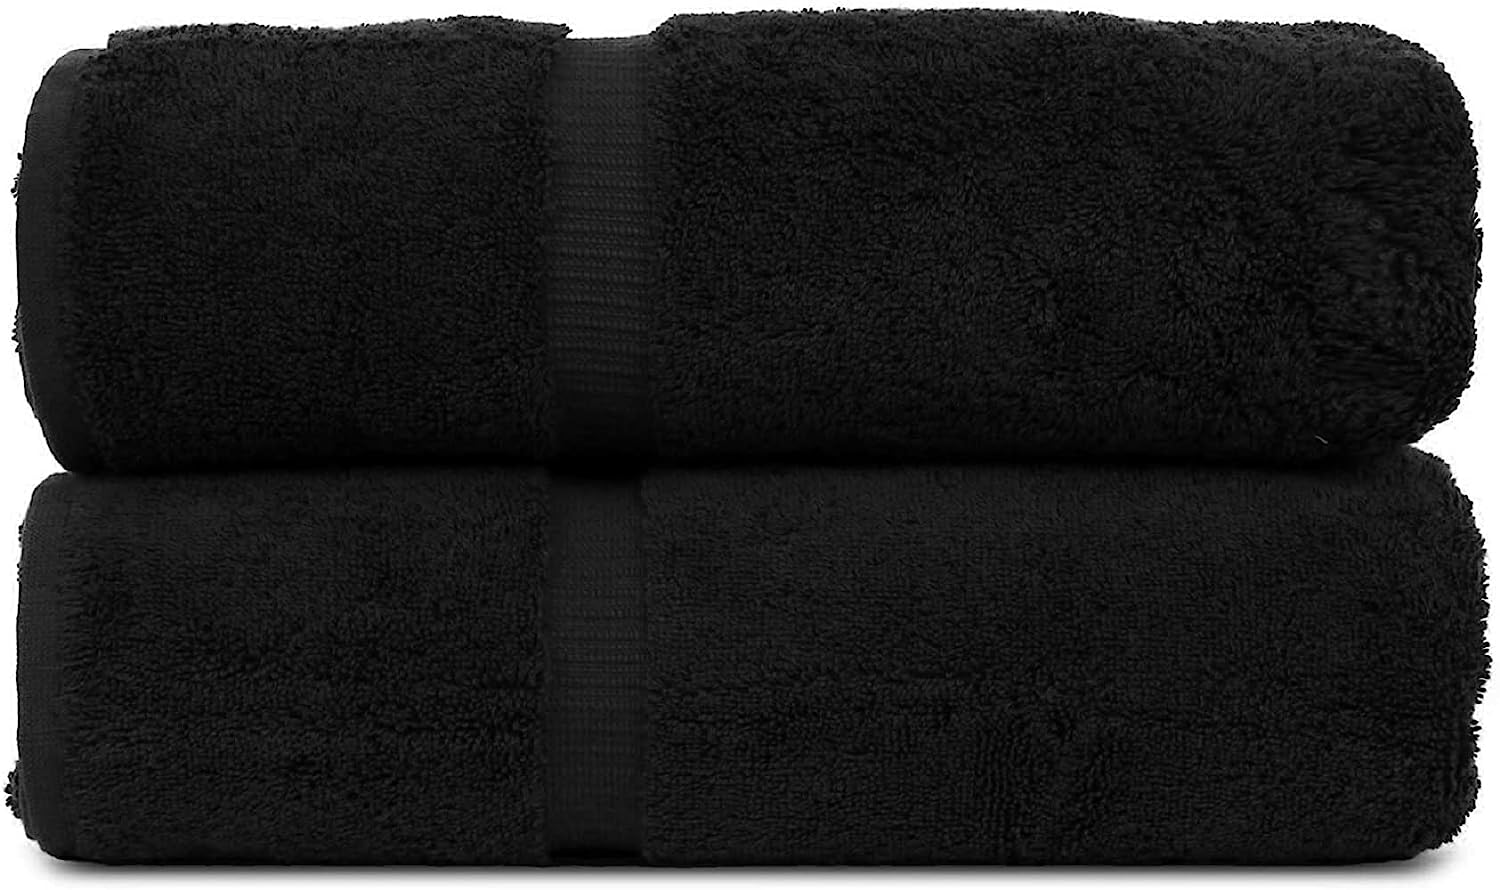 AYUS Bath Towel Set 30 x 60 inch,100% Ring Spun Cotton, Ultra Soft Highly Absorbent Machine Washable Hotel Spa Quality Bath Towels for Bathroom, 2 Bath Towels Black